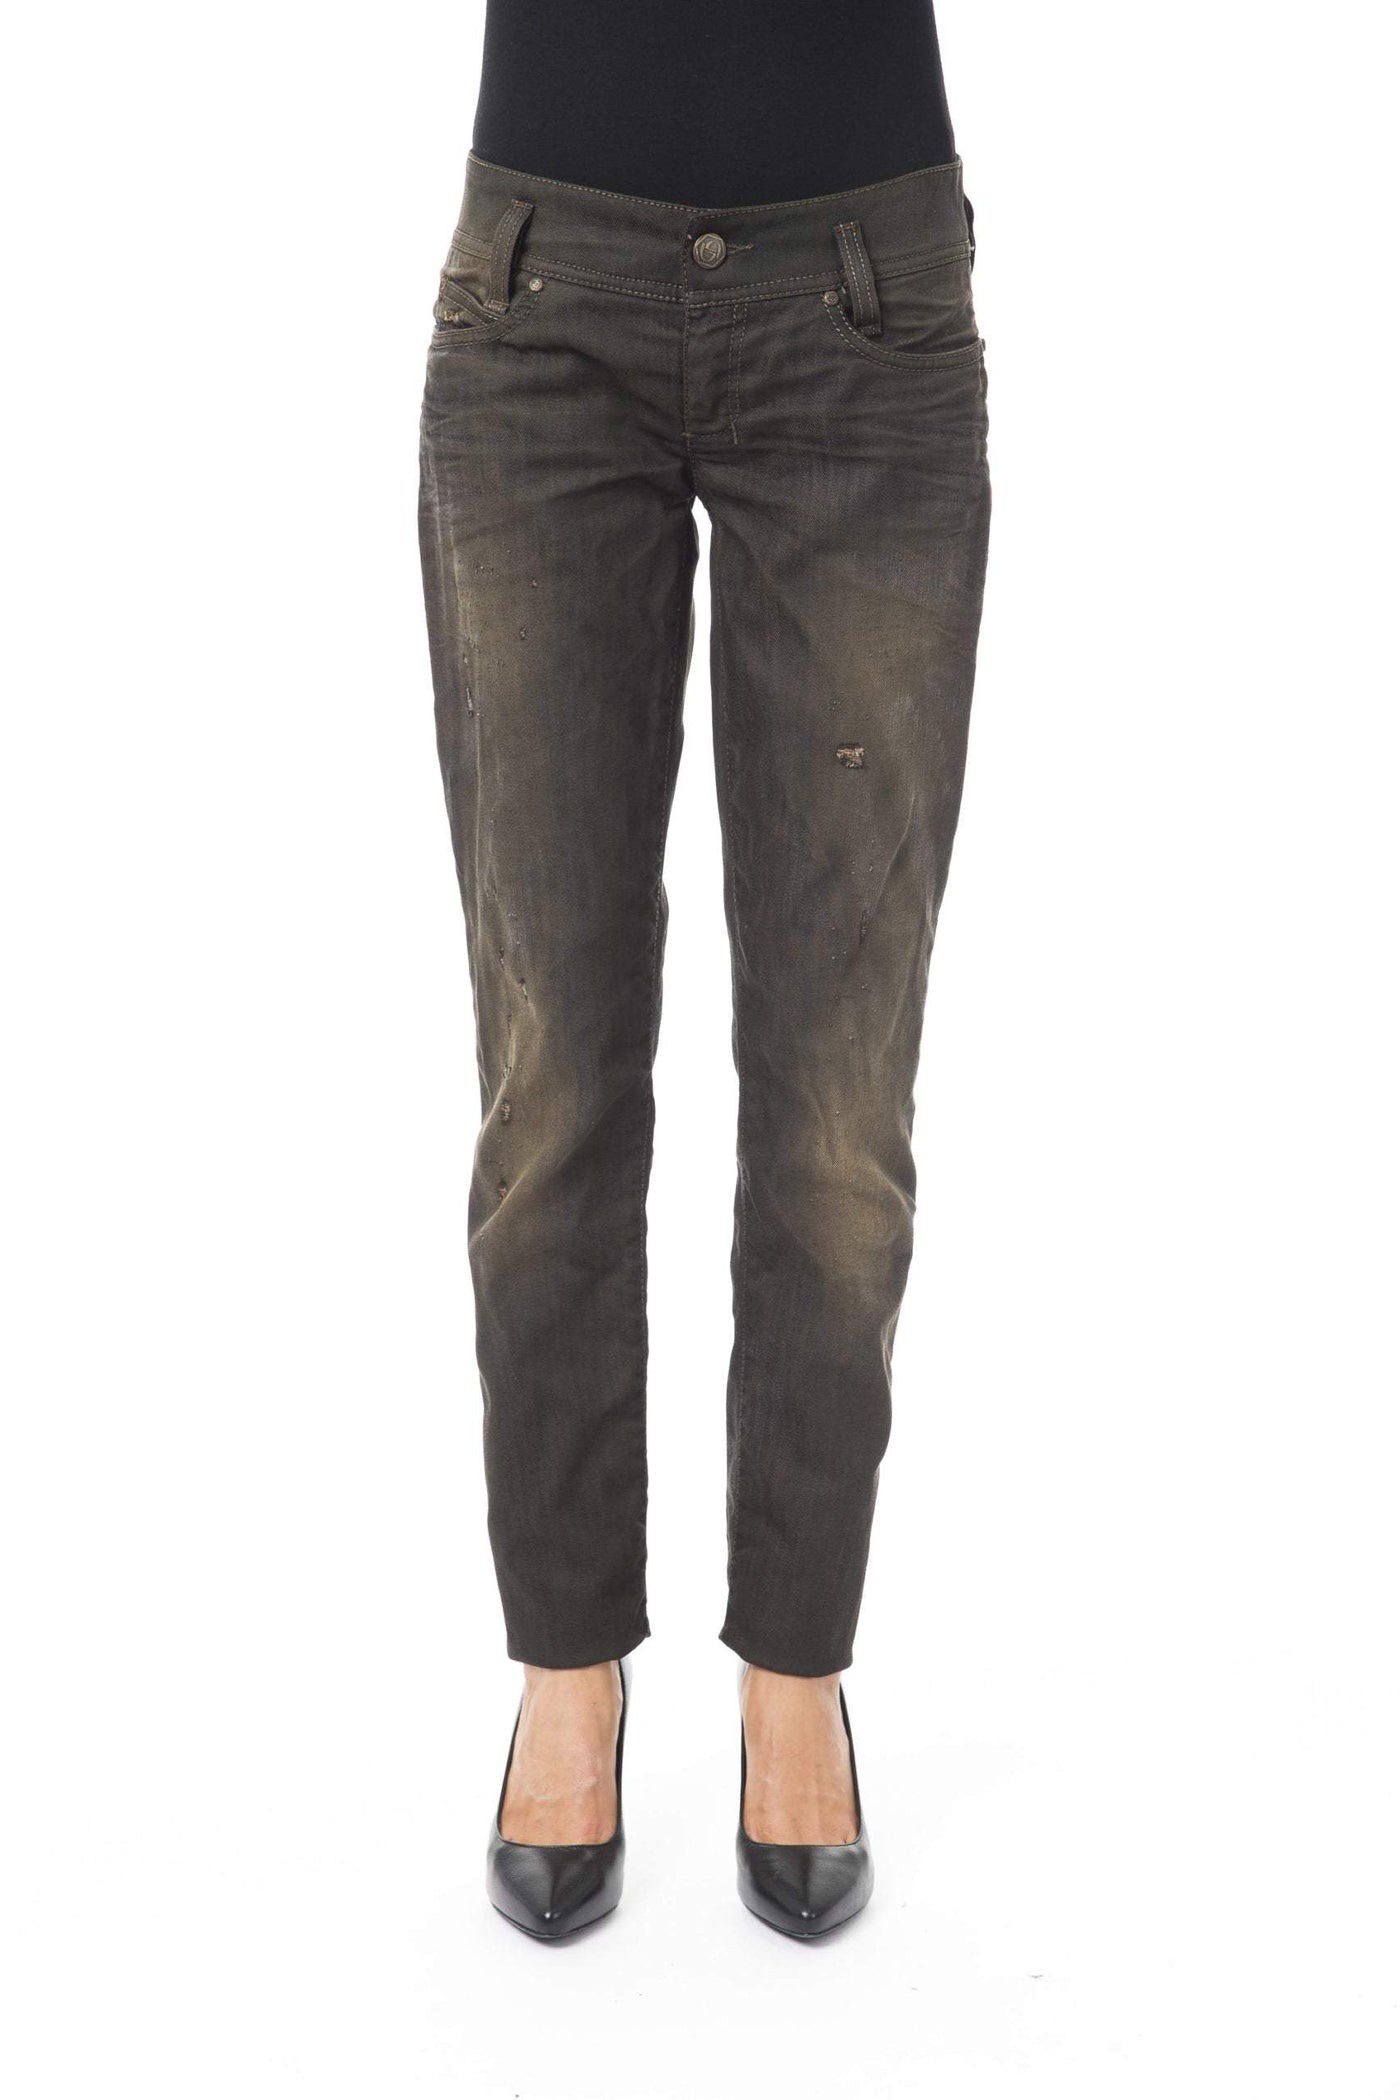 BYBLOS Black Cotton Jeans & Pant Black, BYBLOS, feed-1, Jeans & Pants - Women - Clothing, W26 | IT40, W30 | IT44, W31 | IT45 at SEYMAYKA